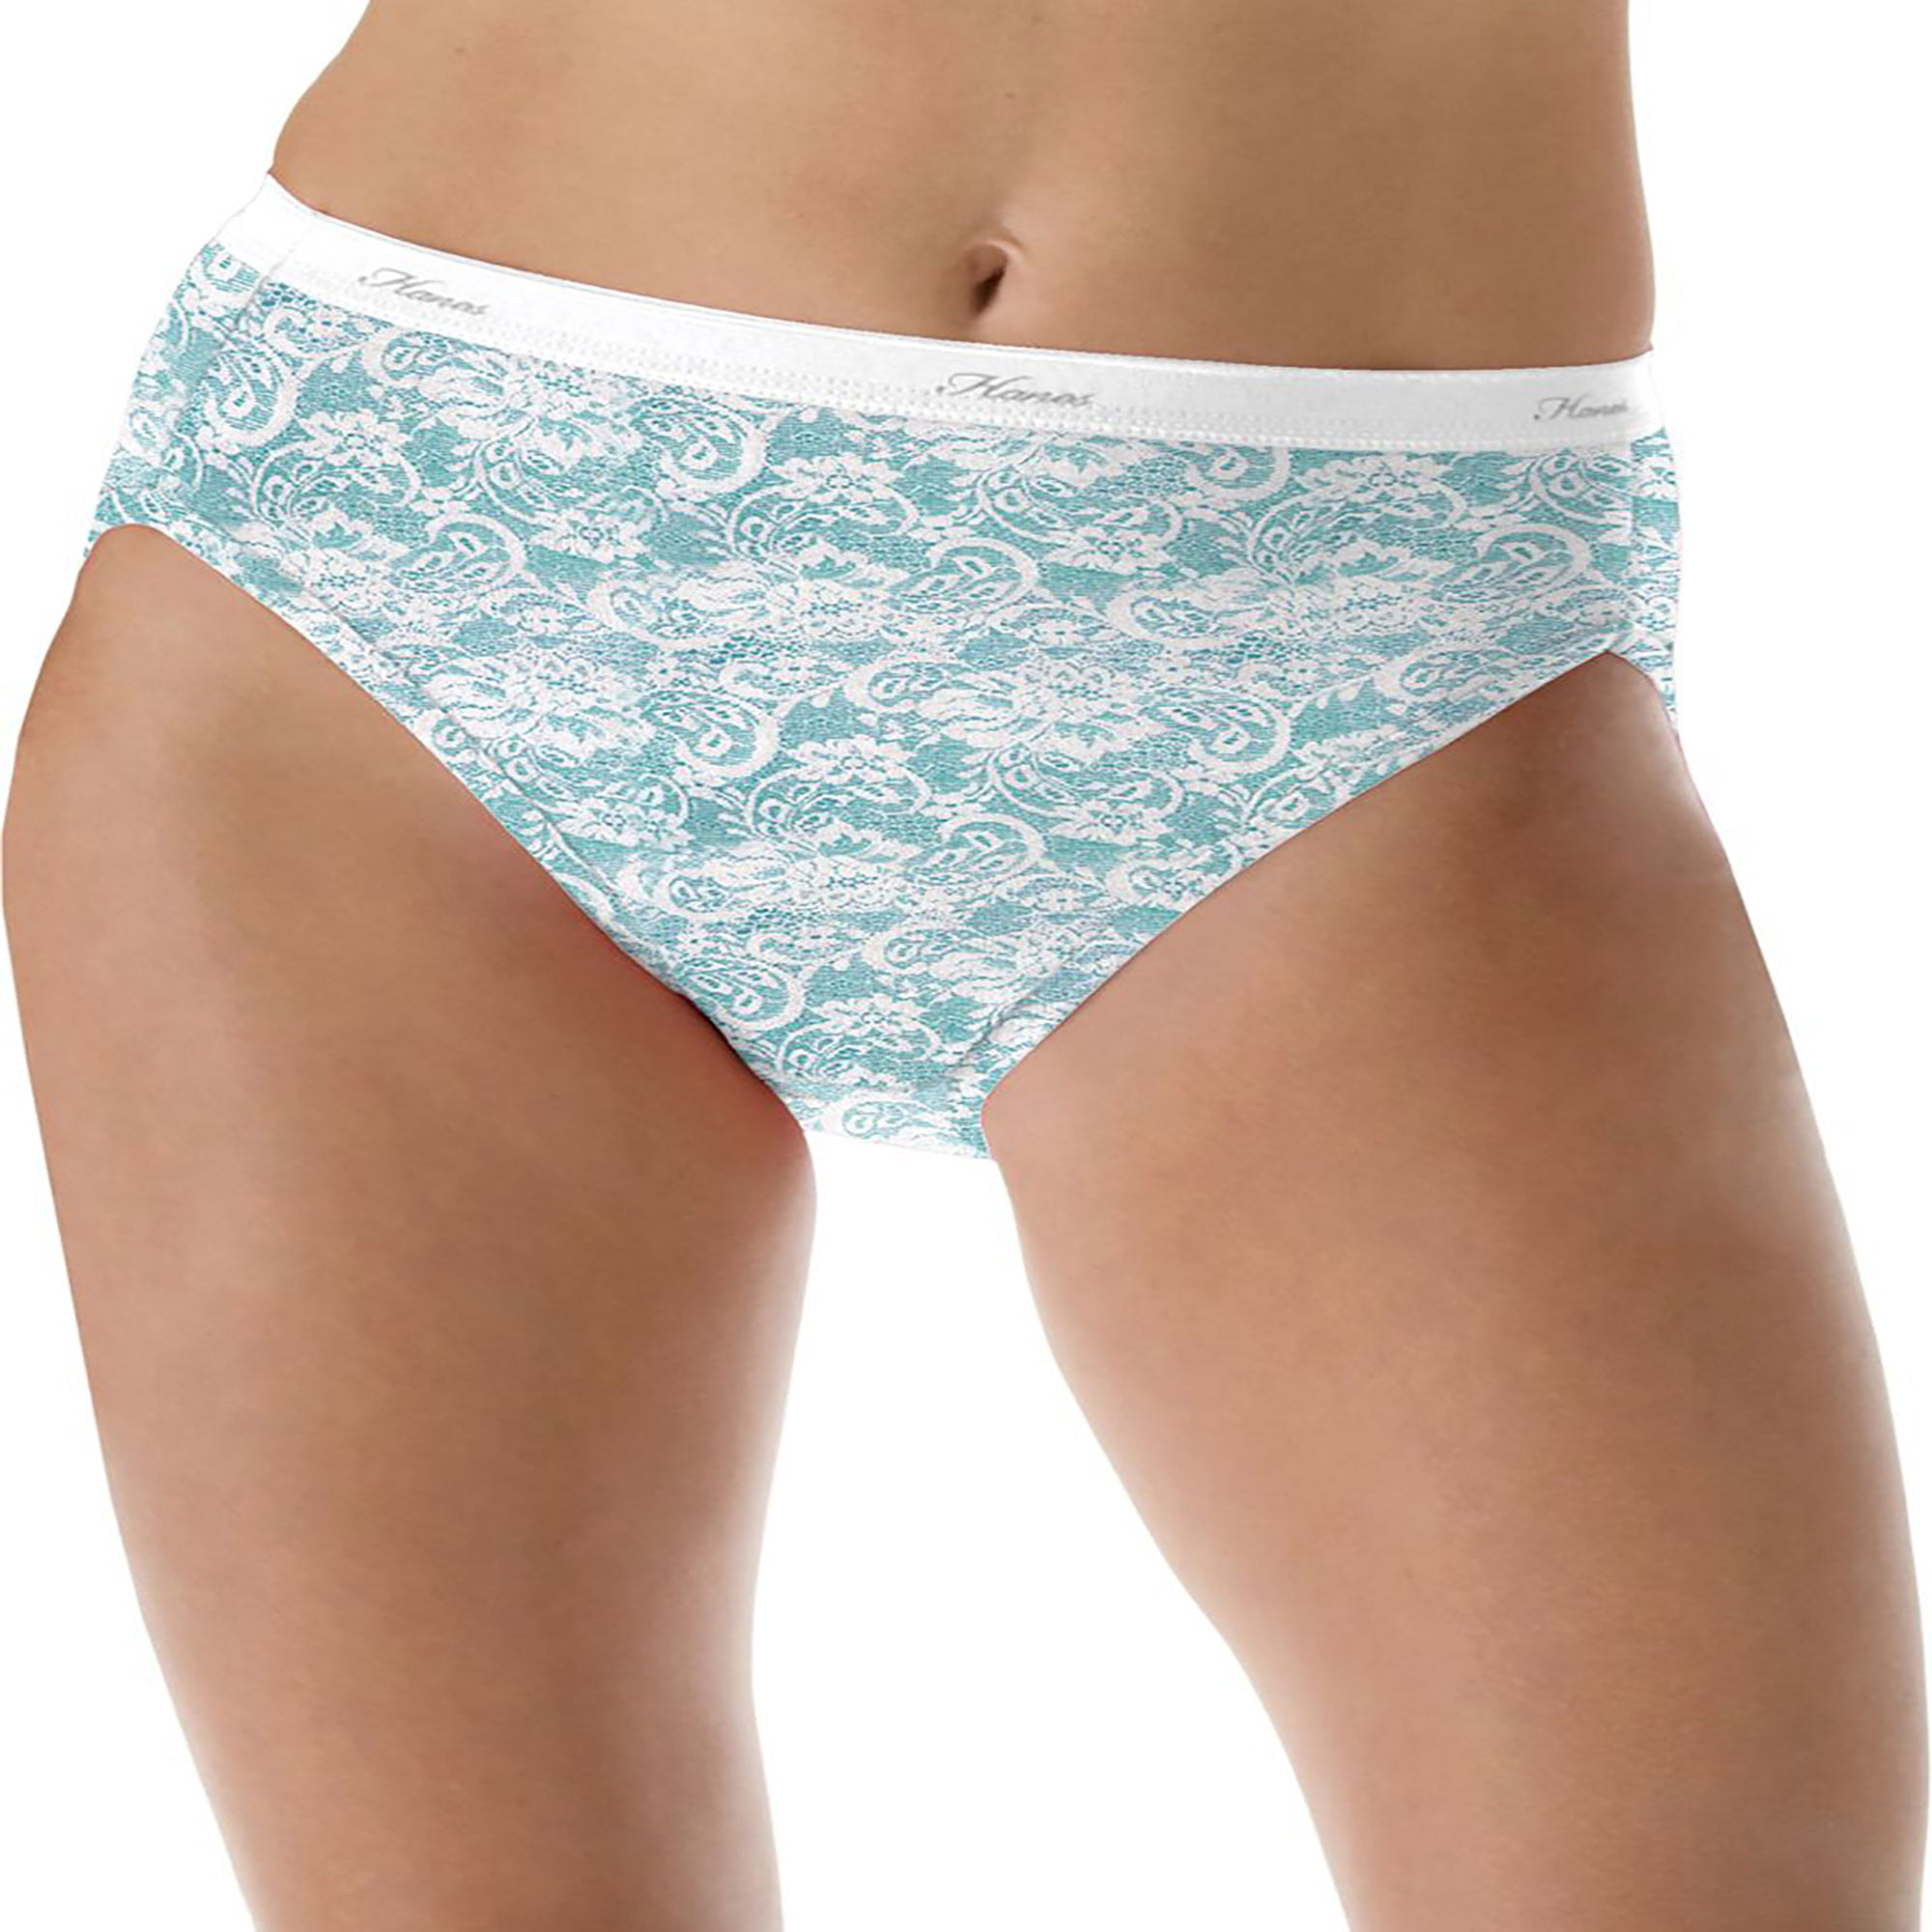 Hanes Women's No Ride Up Cotton Hi-Cut Panties 6-Pack, Style PP43WB 